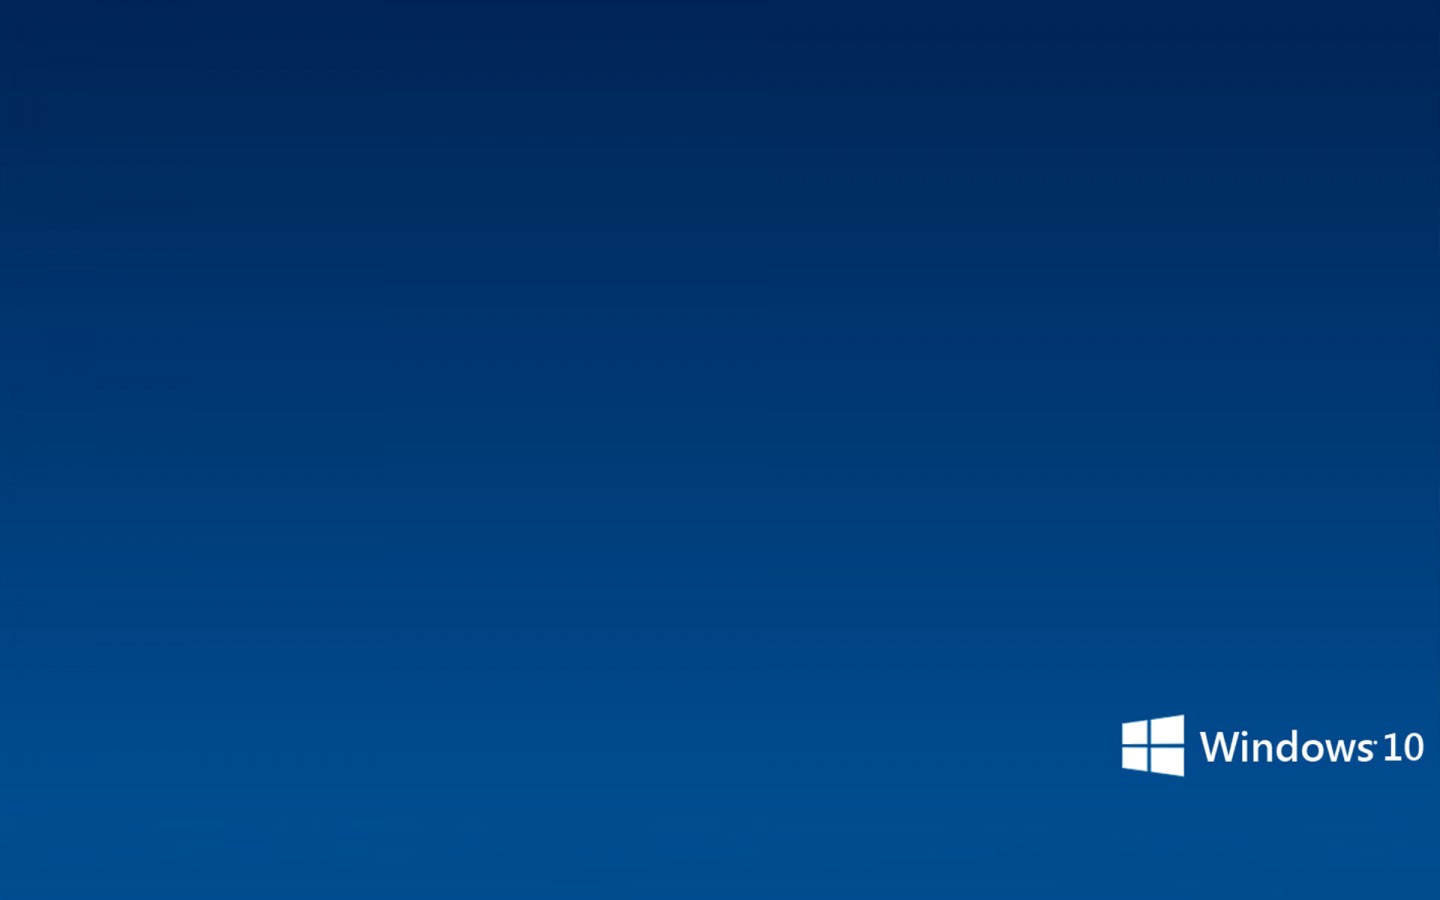 Windows 10 Wallpaper 1440x900 - WallpaperSafari